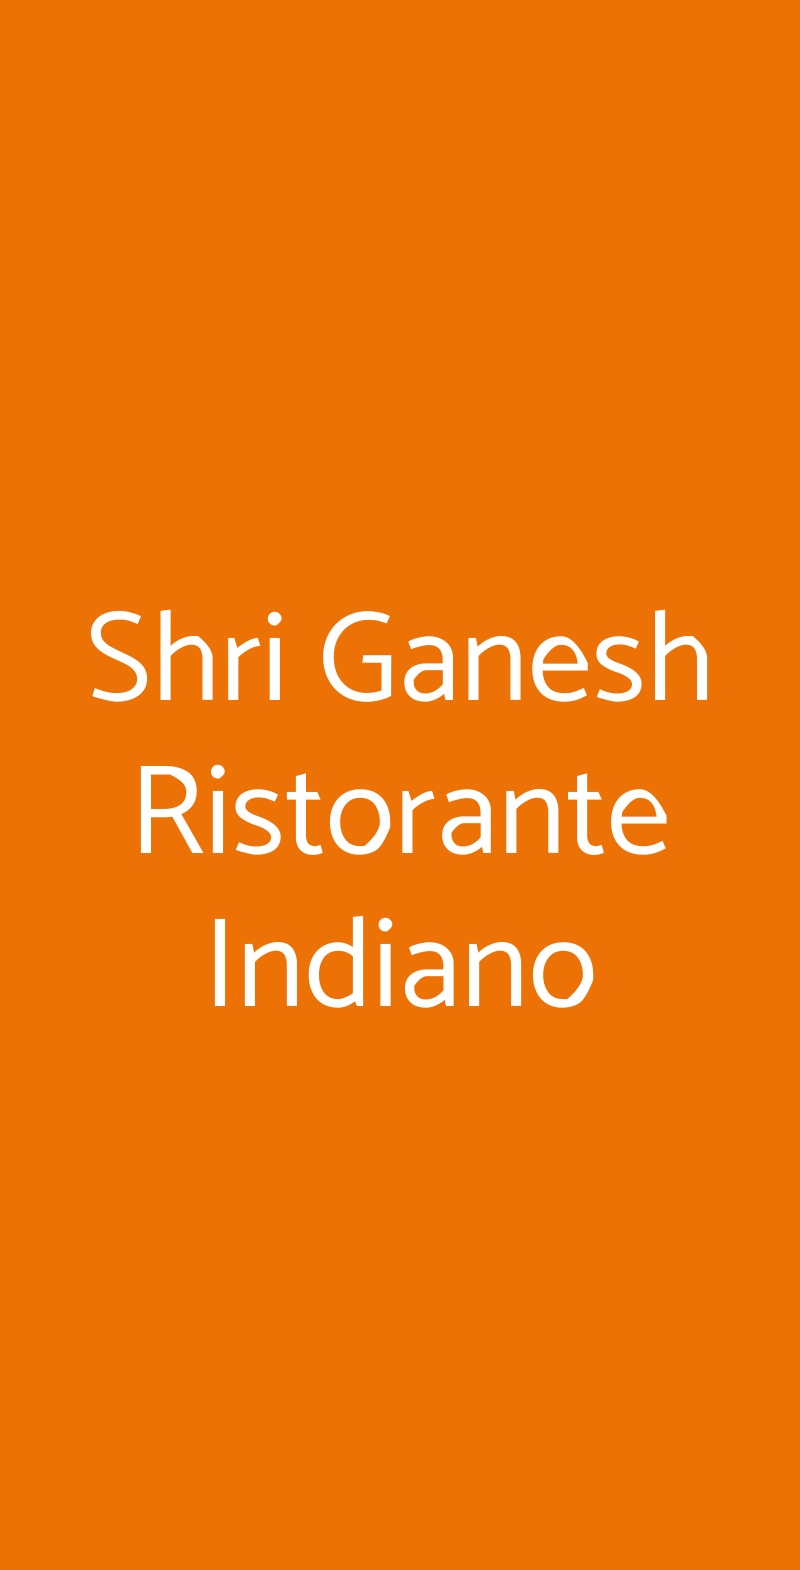 Shri Ganesh Ristorante Indiano Sanremo menù 1 pagina